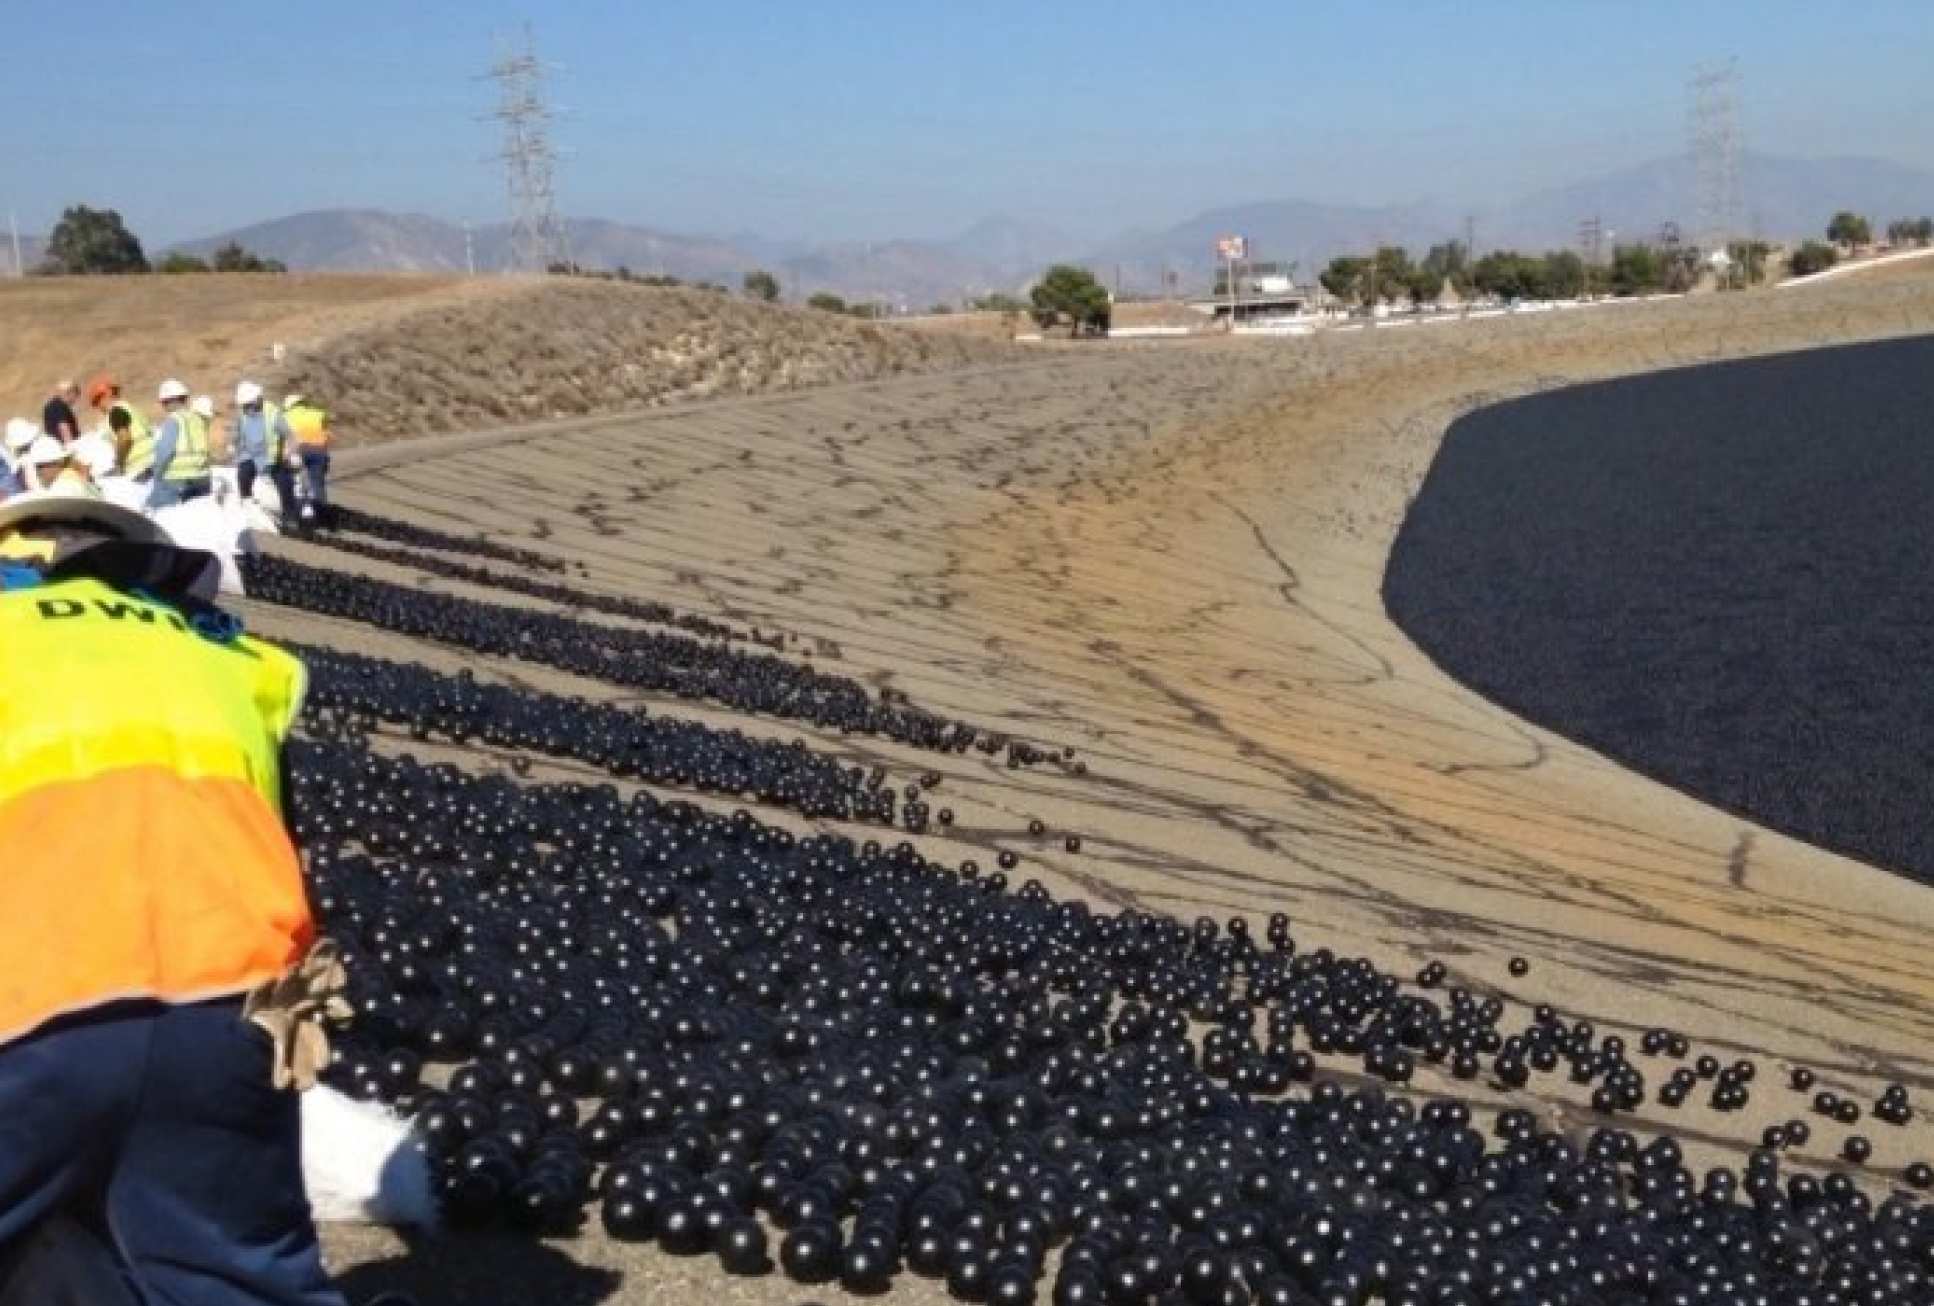 Deployment of shade balls at the LA Reservoir